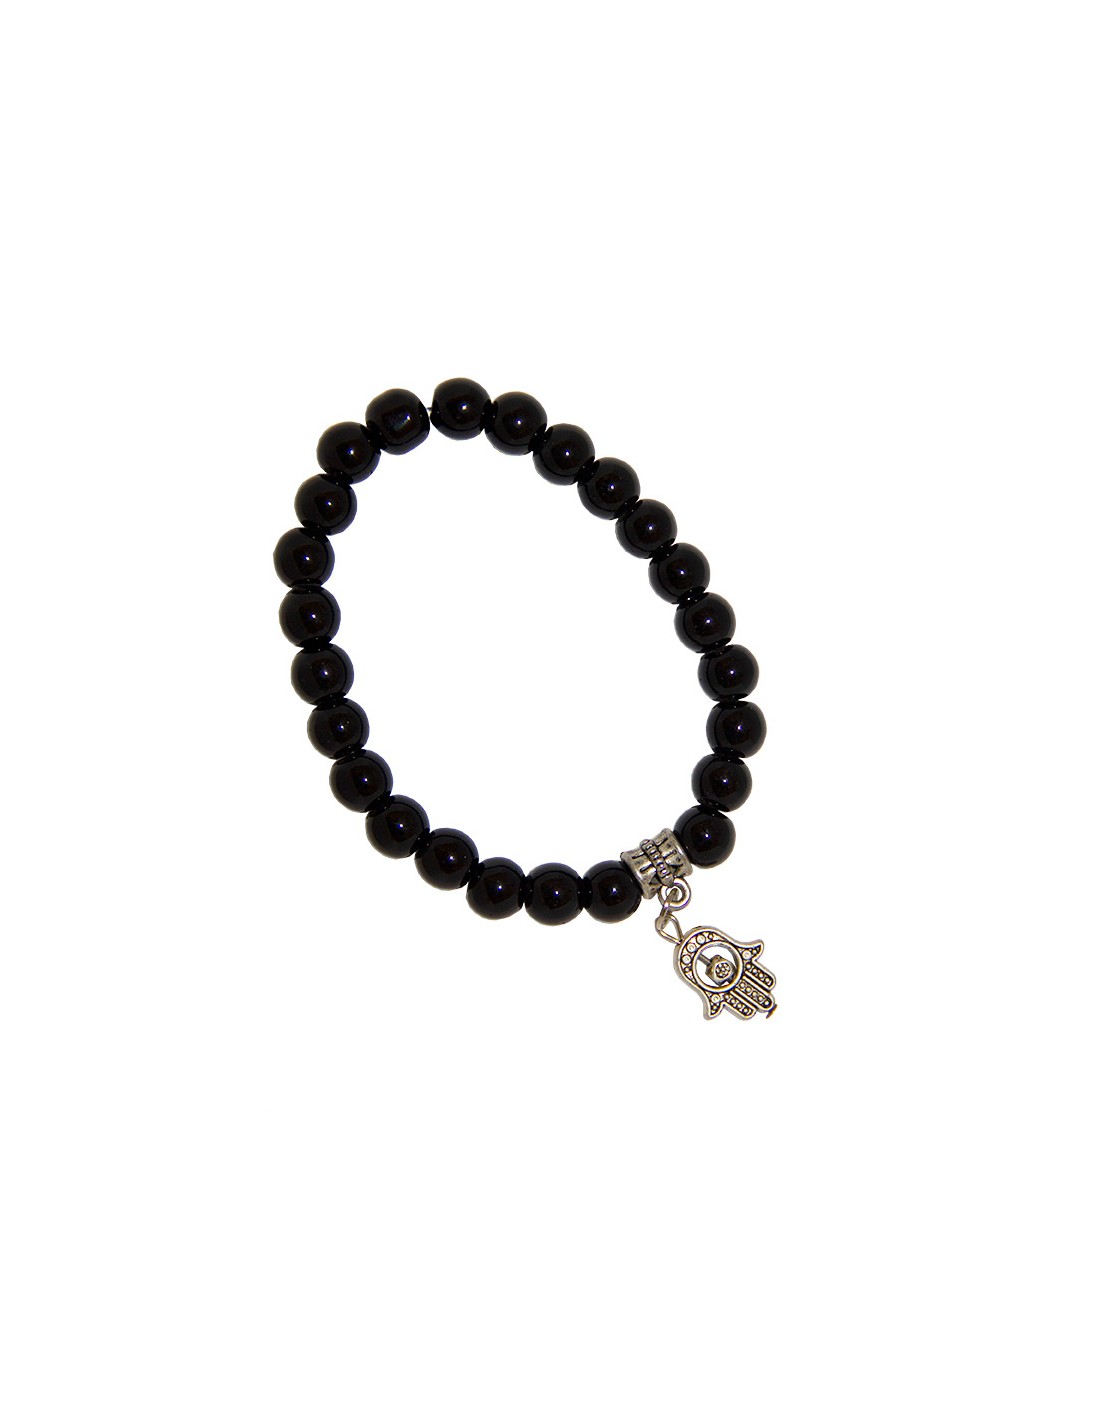 Black and White pearl bracelet